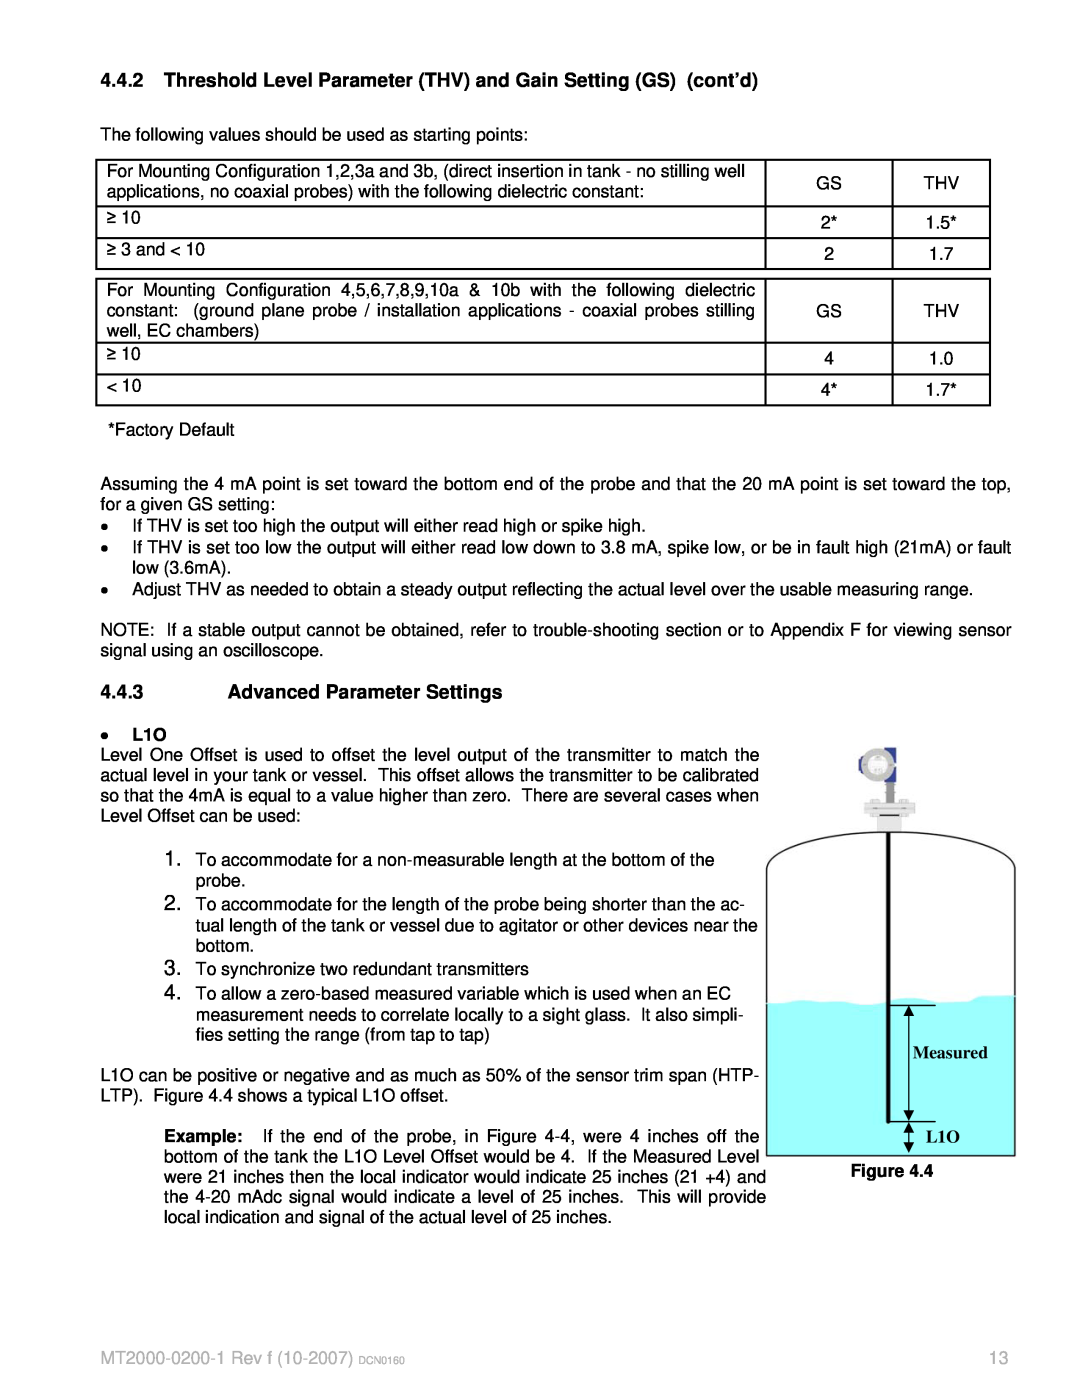 K-Tec manual 4.4.3Advanced Parameter Settings, Measured L1O, MT2000-0200-1Rev f 10-2007 DCN0160 